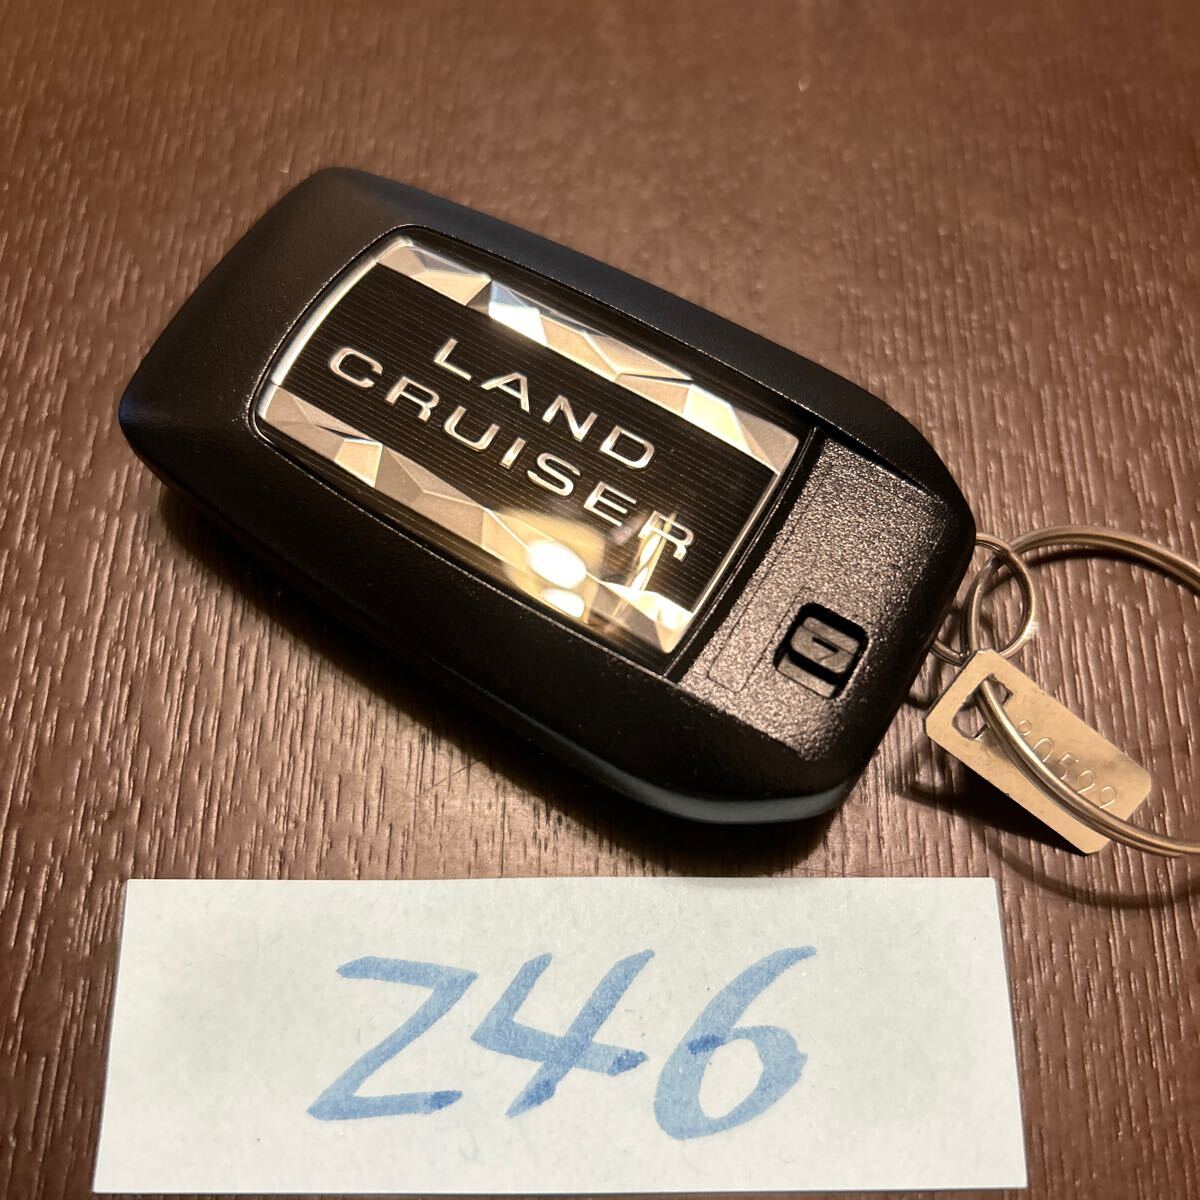 [246] 300 серия Land Cruiser оригинальный "умный" ключ 300 серия Land Cruiser 